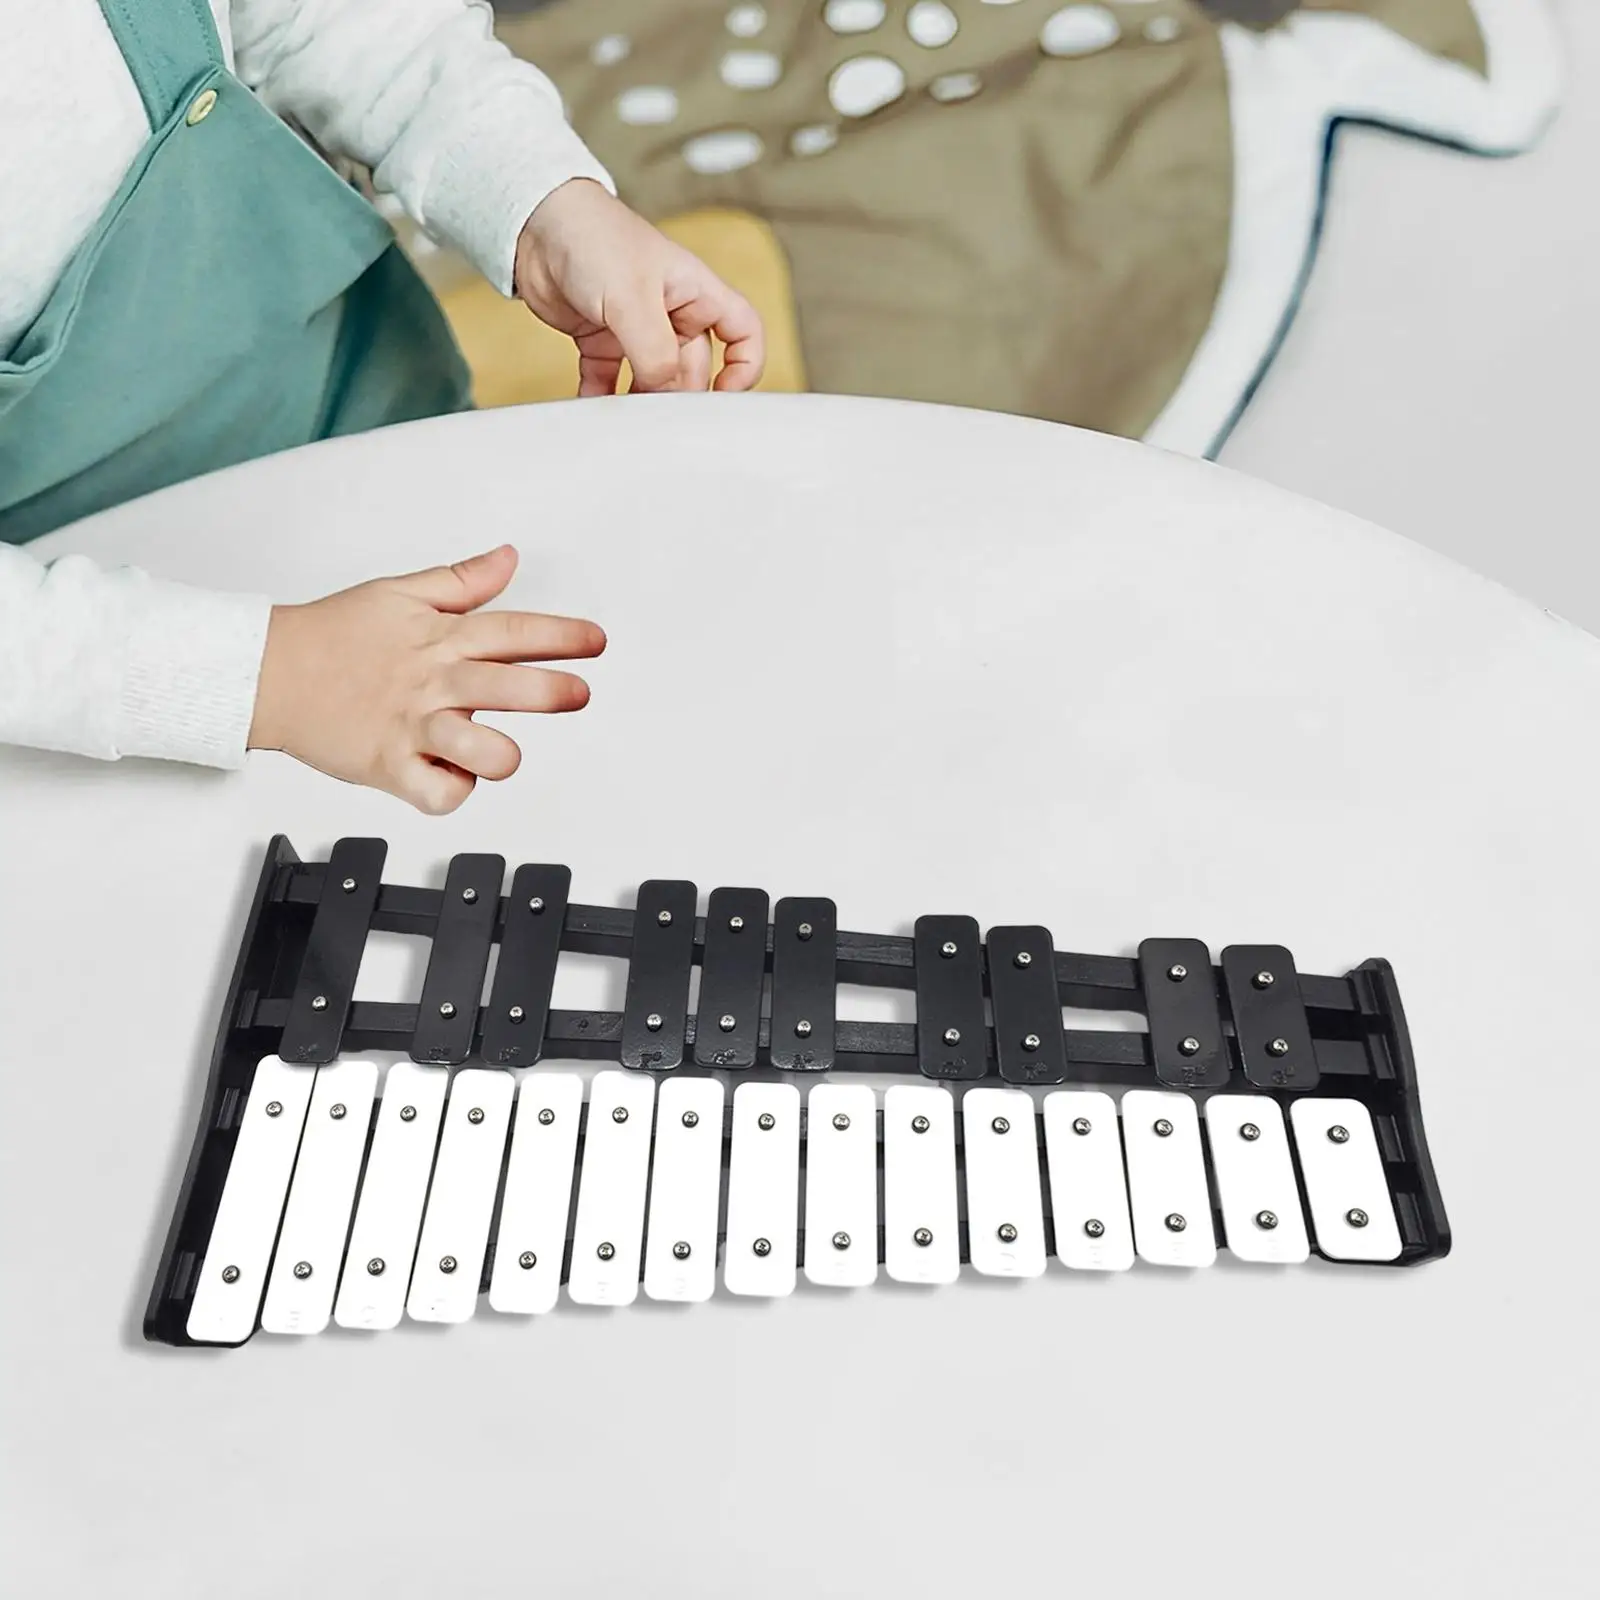 25 Key Glockenspiel Professional for Beginners Portable Xylophone Musical Instrument Musical Educational Tuned Glockenspiel